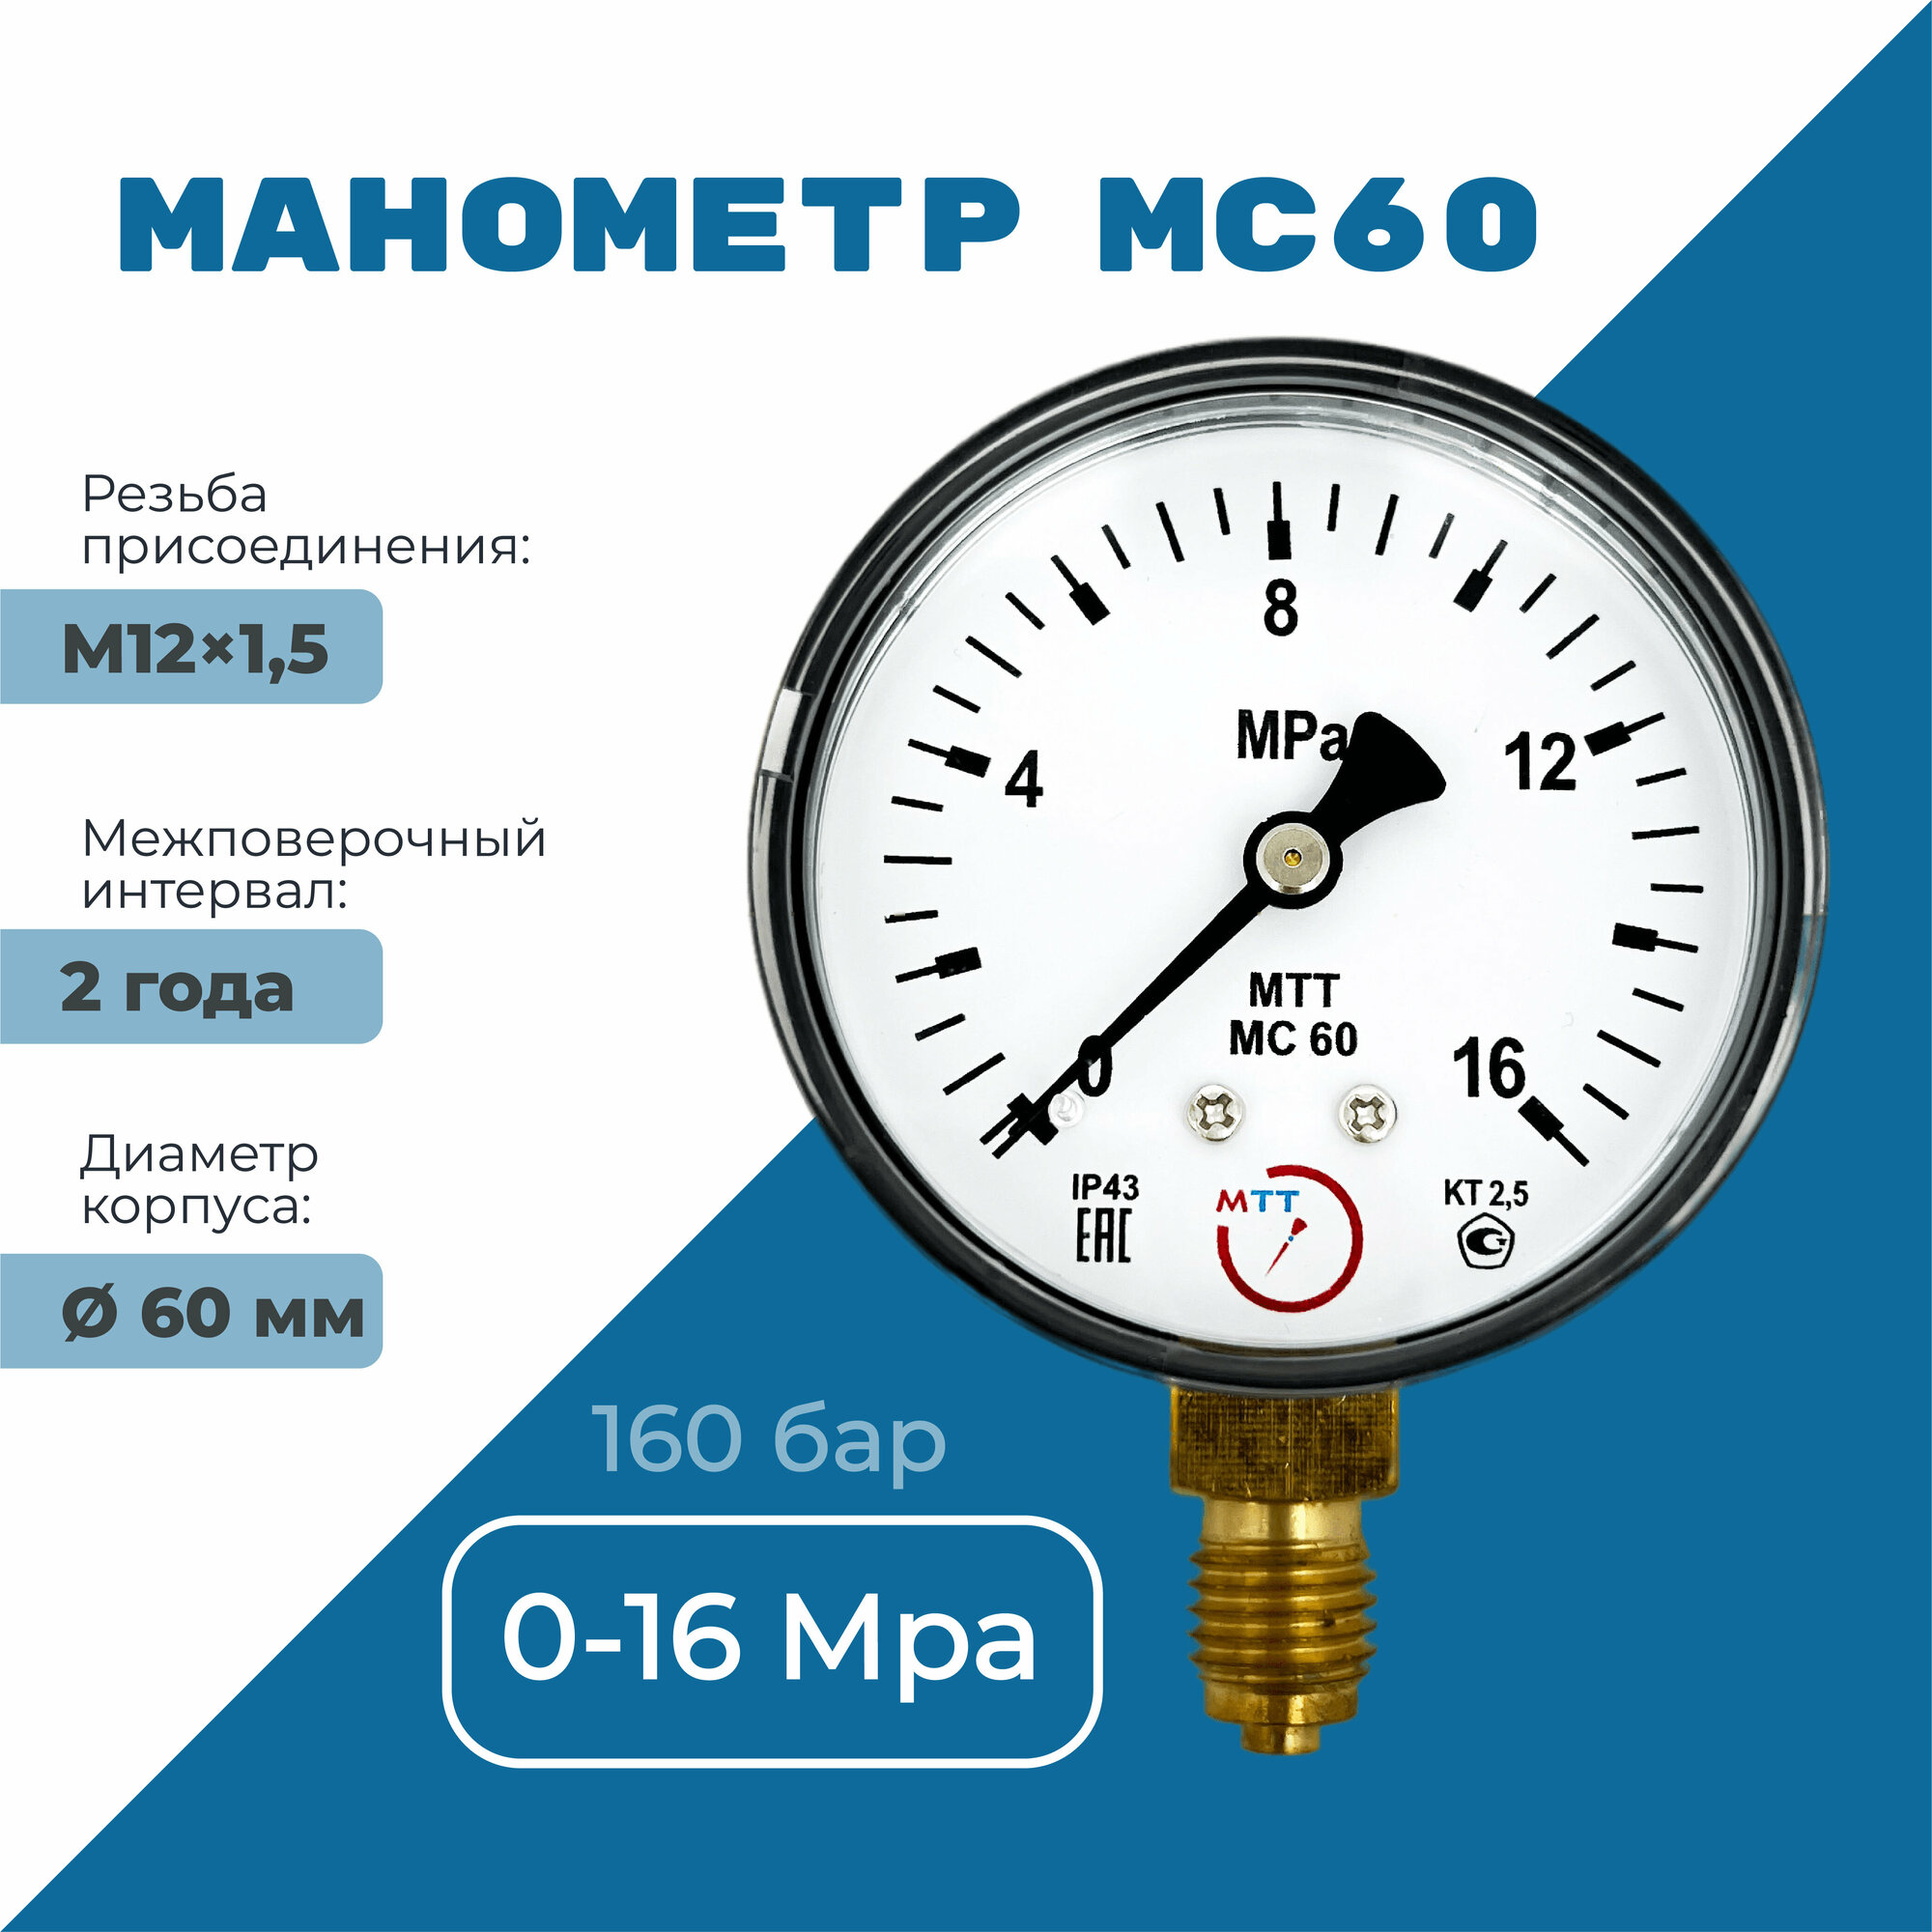 Манометр МС60 давление 0-16 МПа (160 бар) резьба М12х1.5 класс точности 25 корпус 62 мм. поверка 2 года